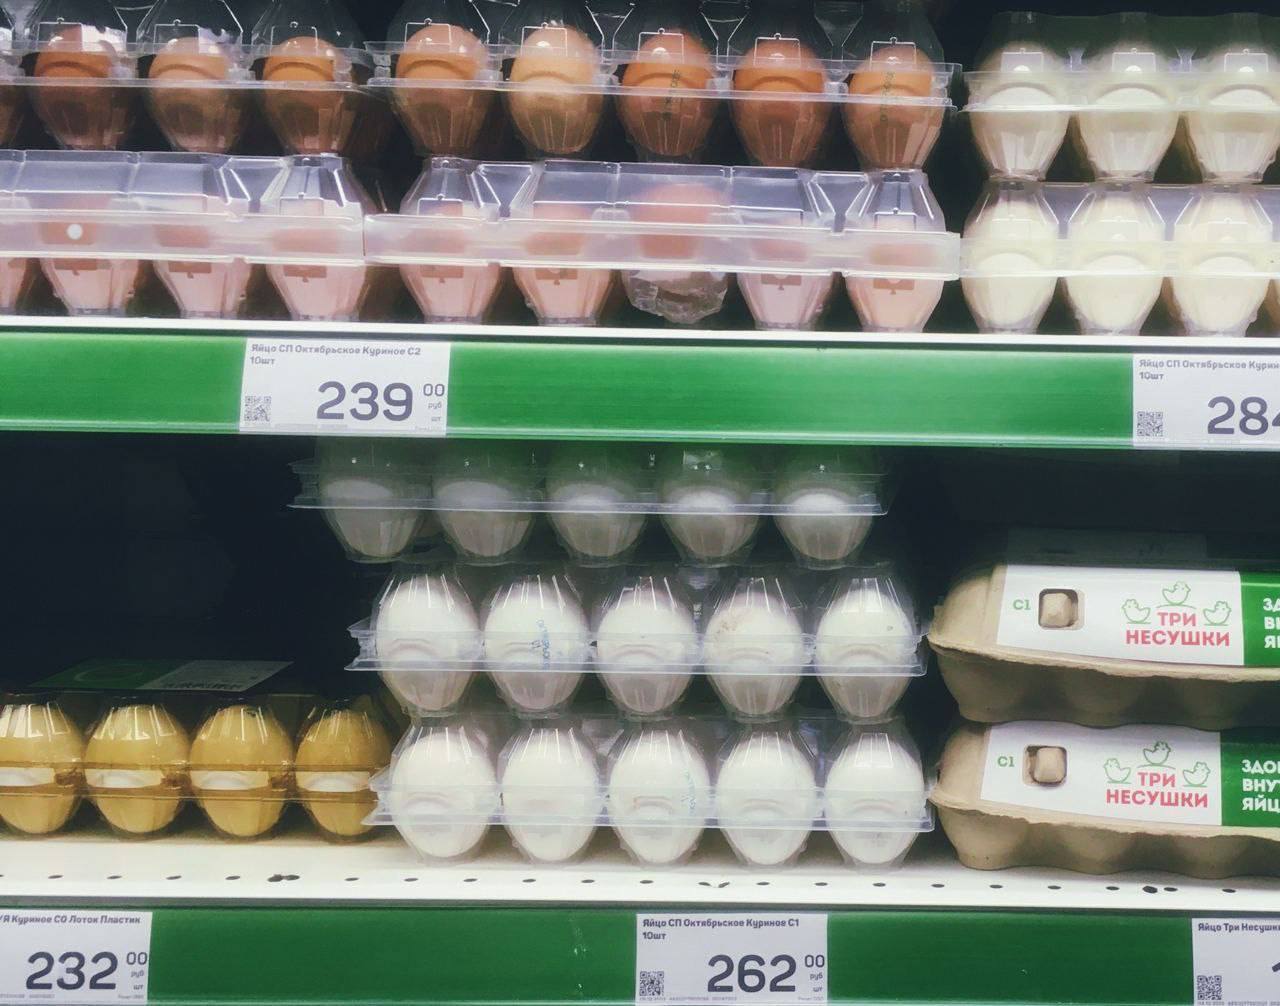 In some regions, eggs are slightly cheaper - 90 hryvnias